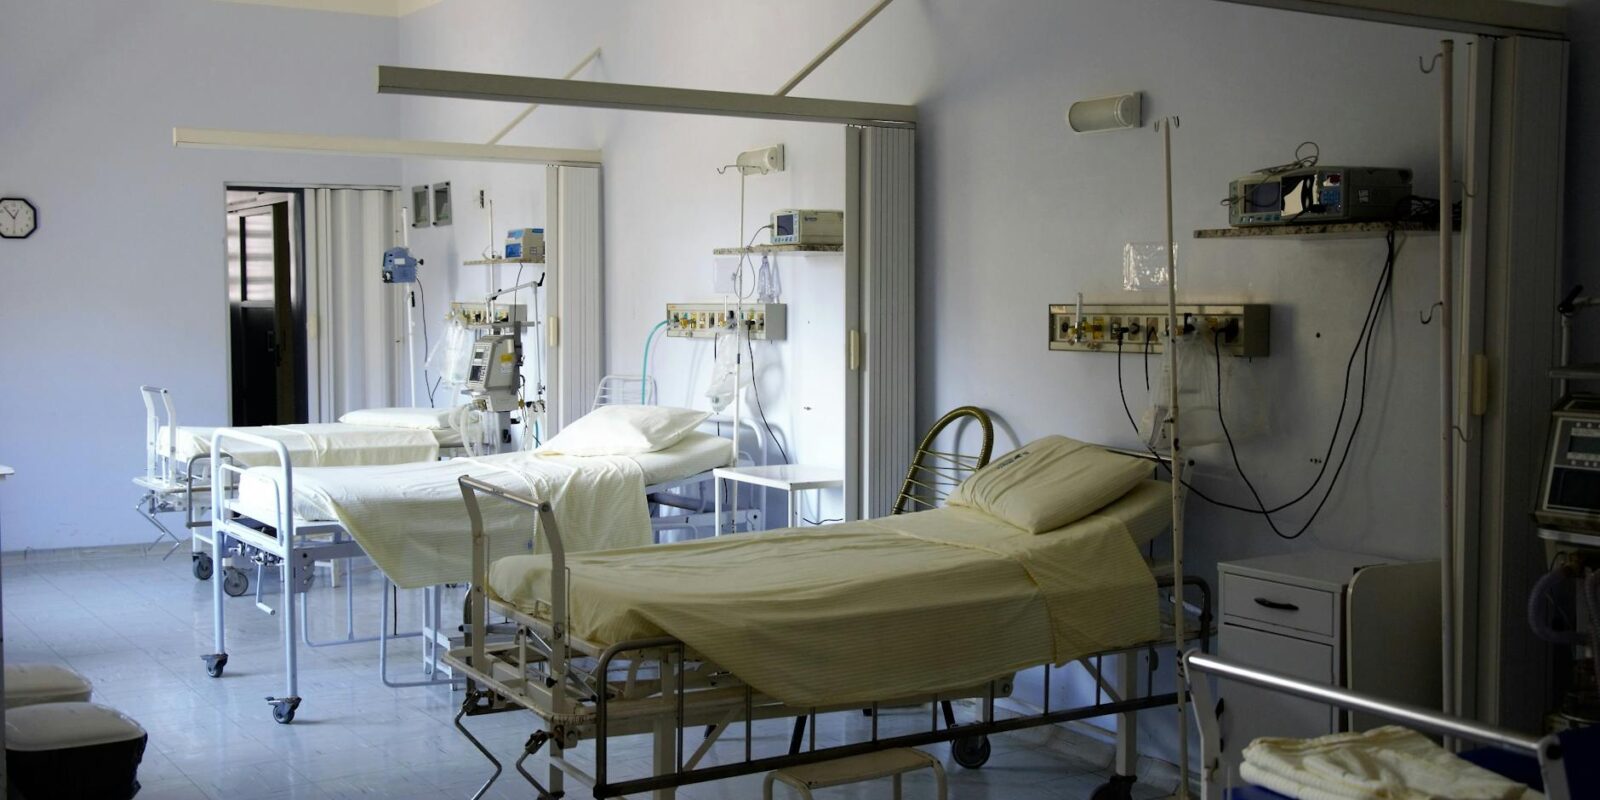 white hospital beds